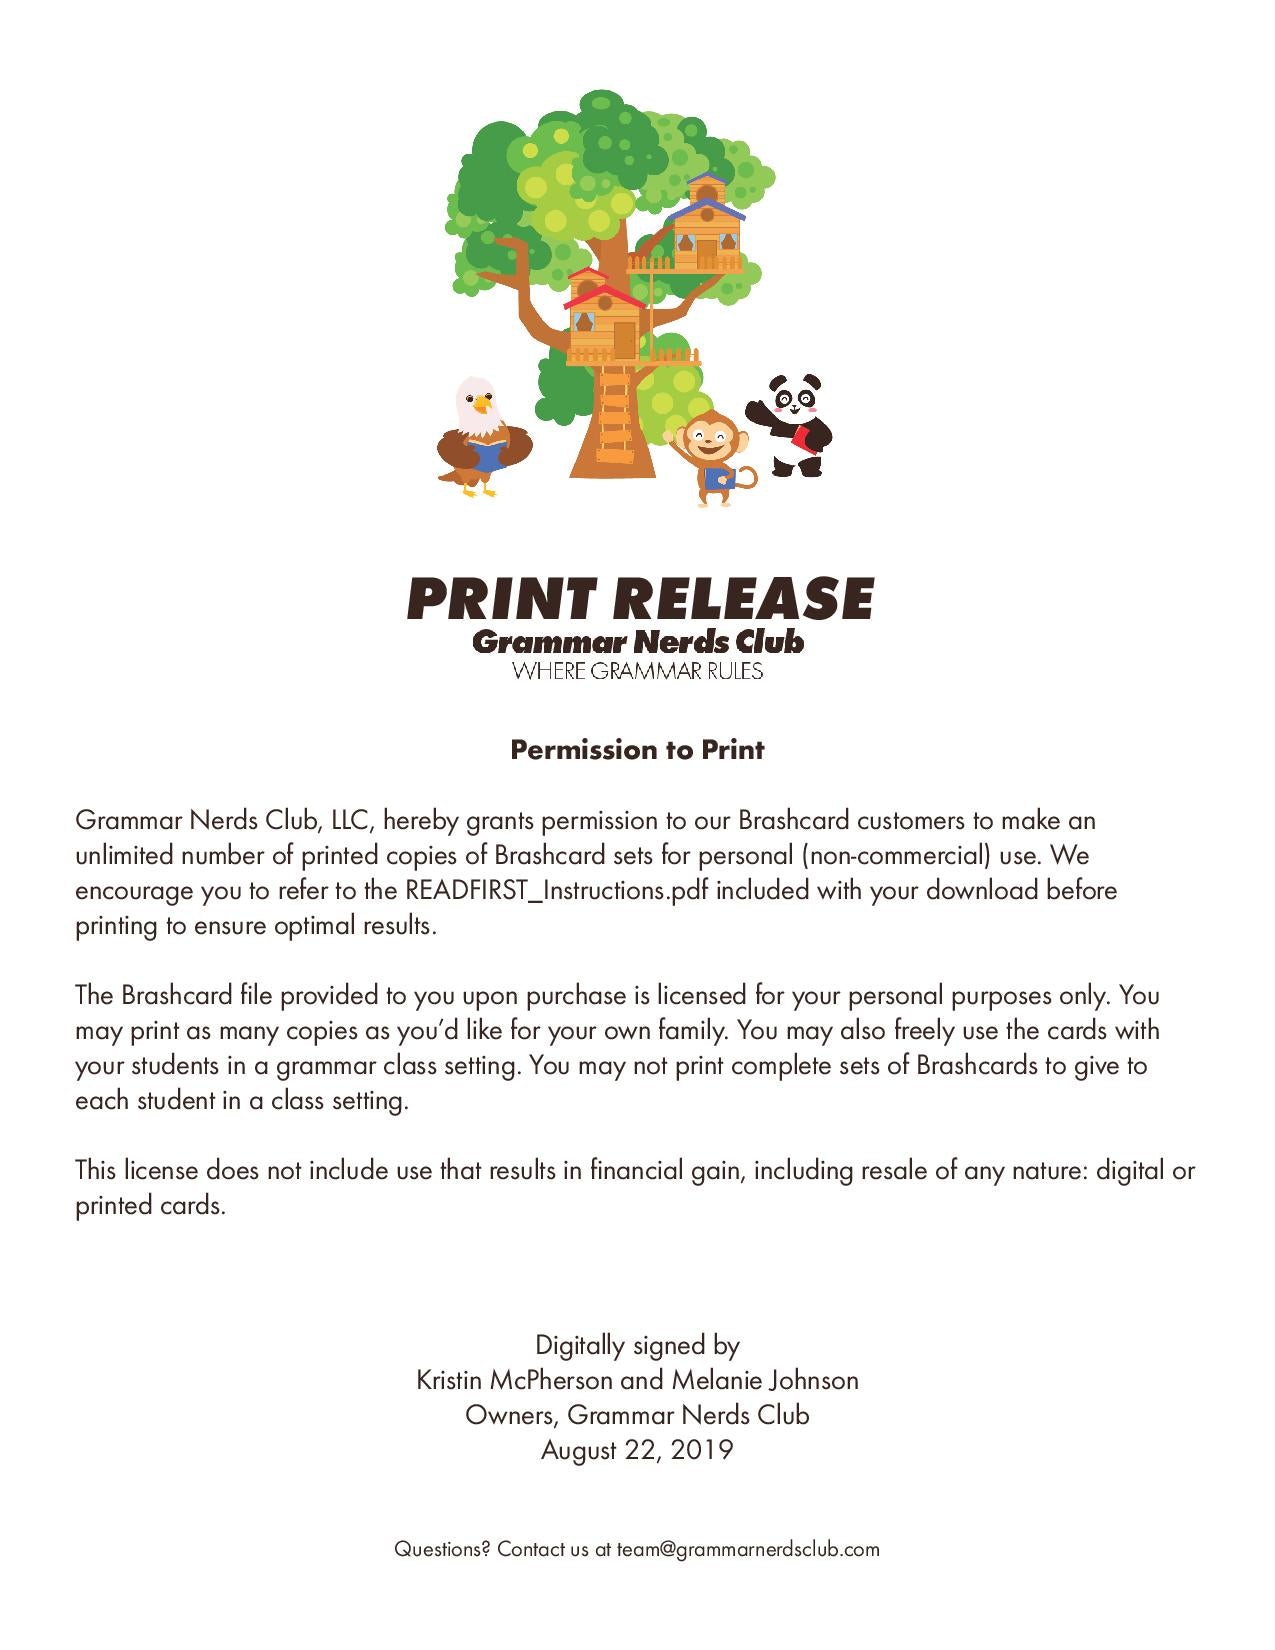 Print Release for Brashcards